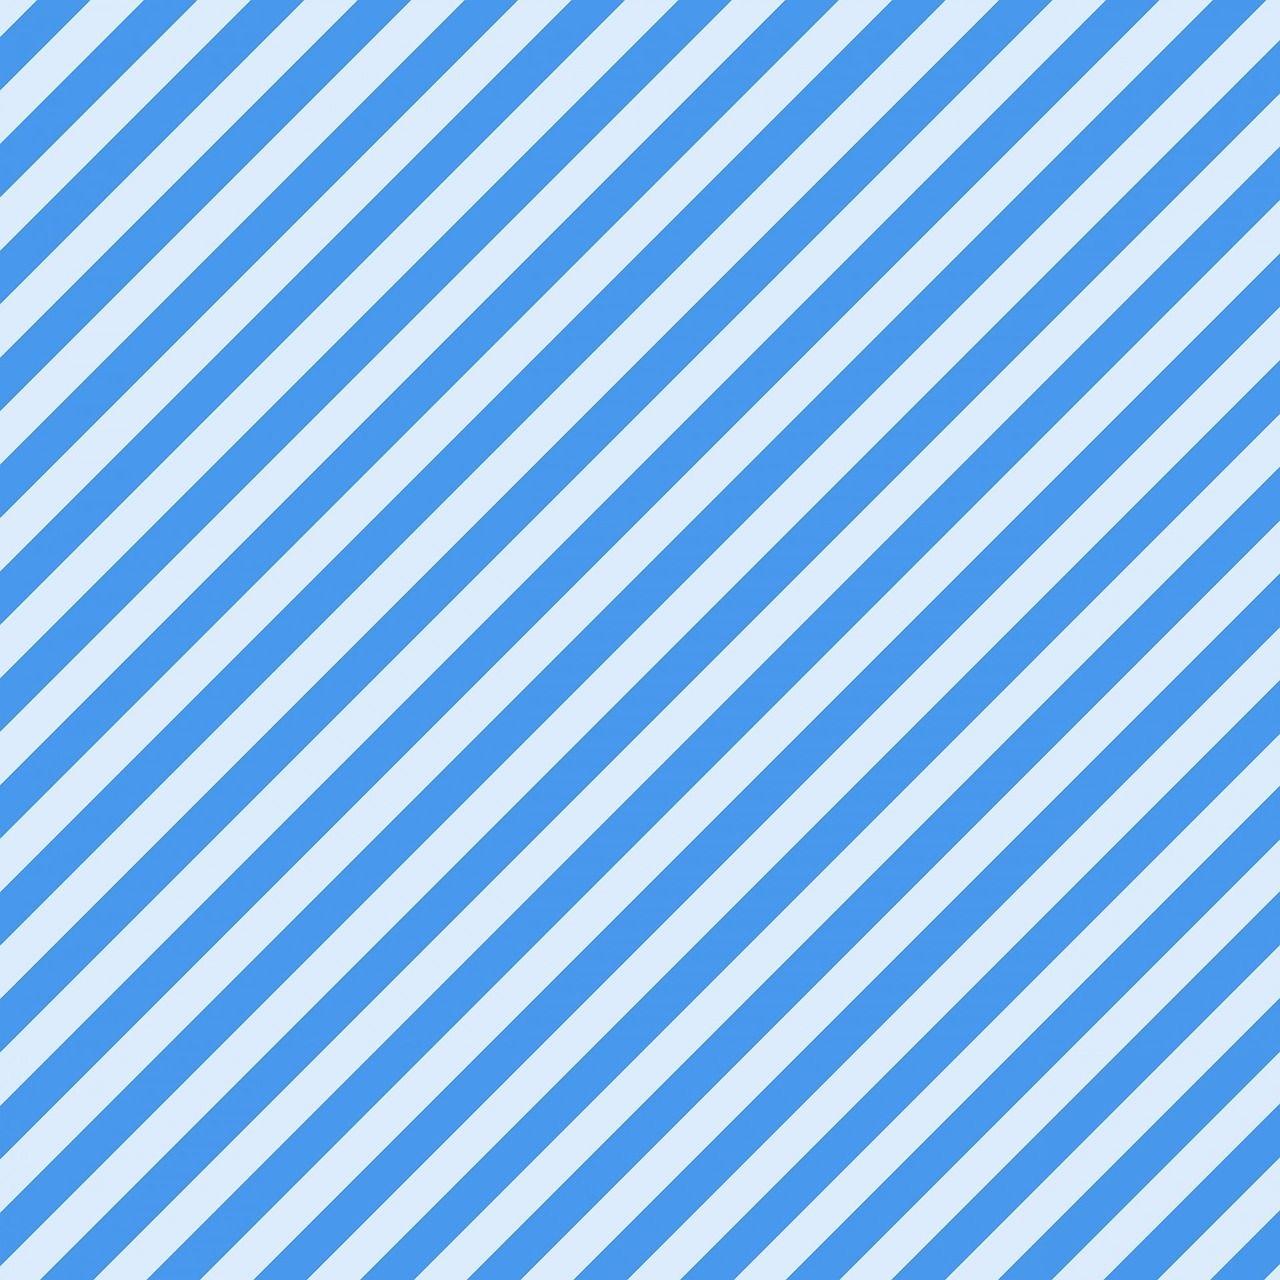 Free Image Striped Diagonal Blue